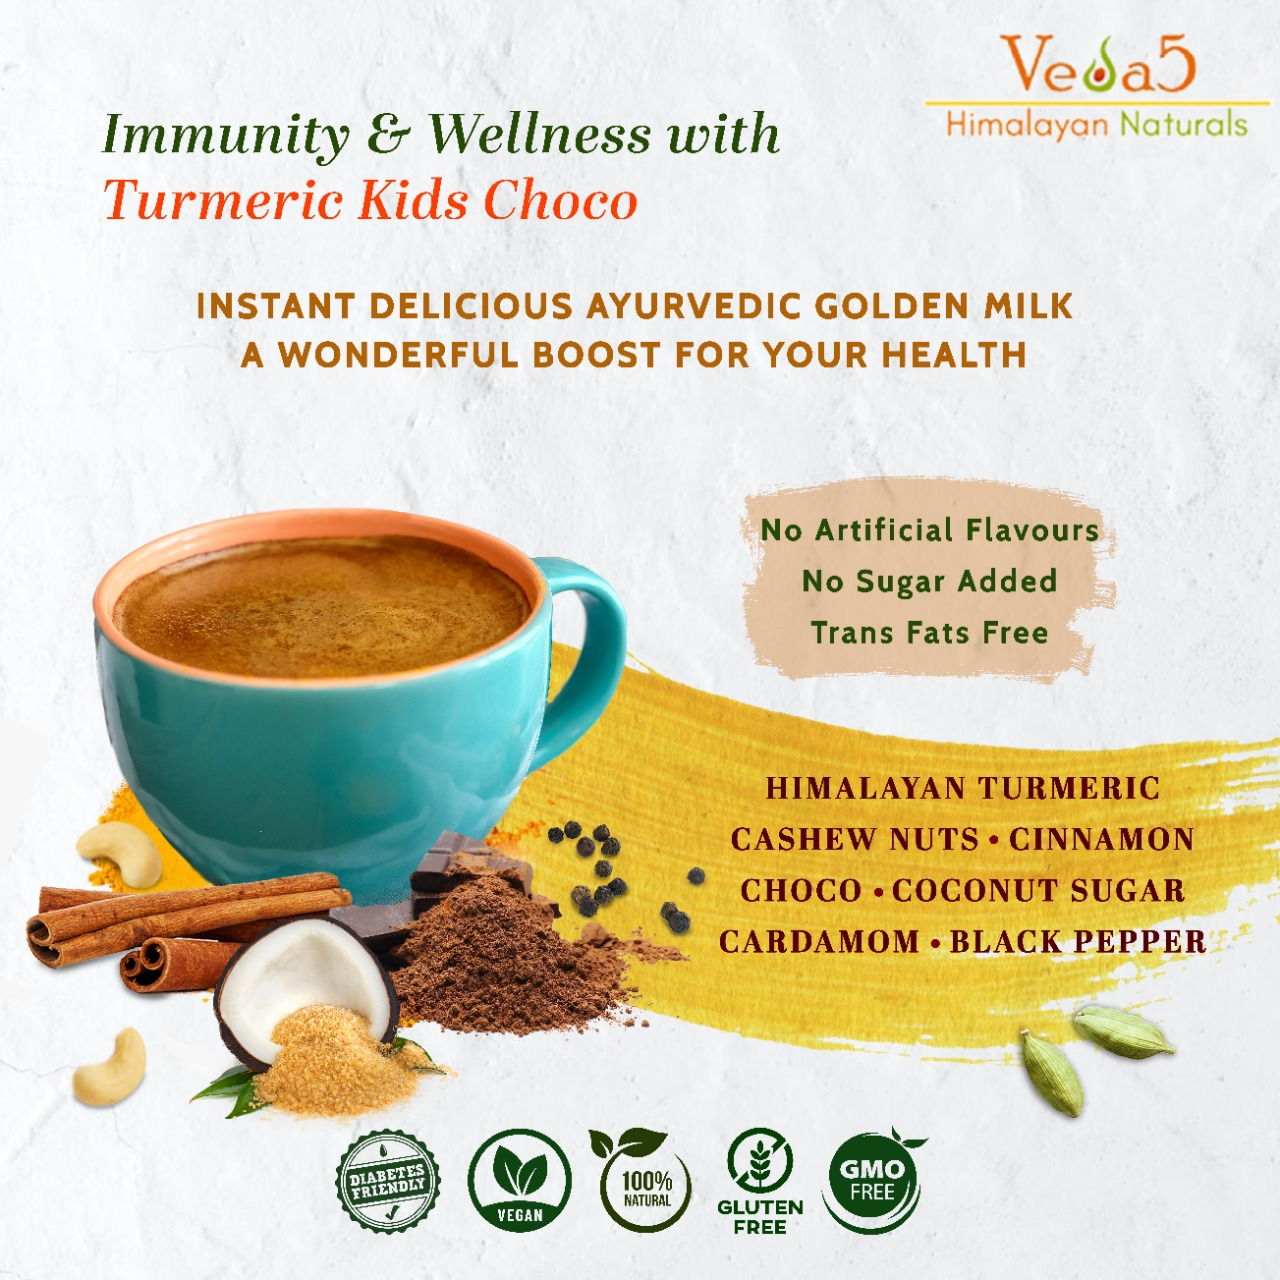 Turmeric Kids Choco Super Milk Enriched with Coconut Milk Ingredients Veda5 Himalayan Naturals